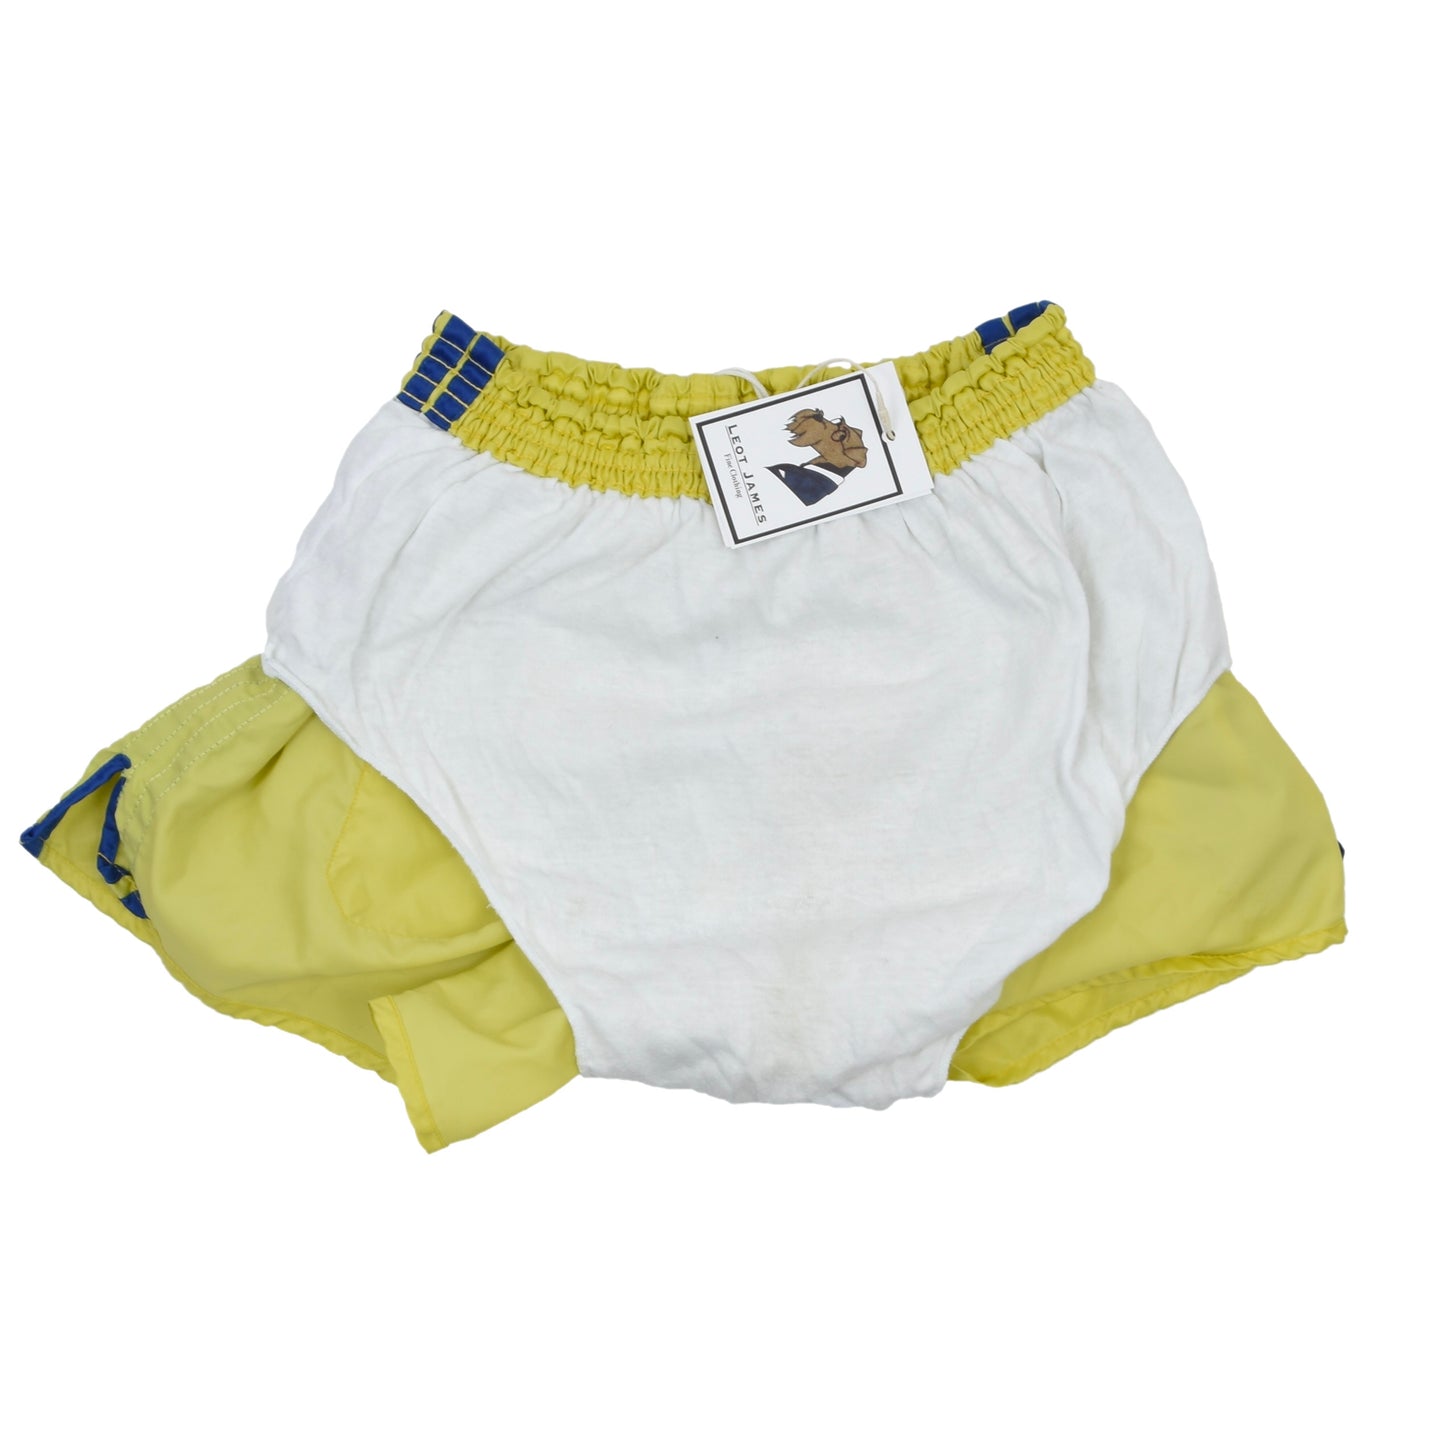 Vintage Adidas Sprinter Shorts Size D7 - Yellow